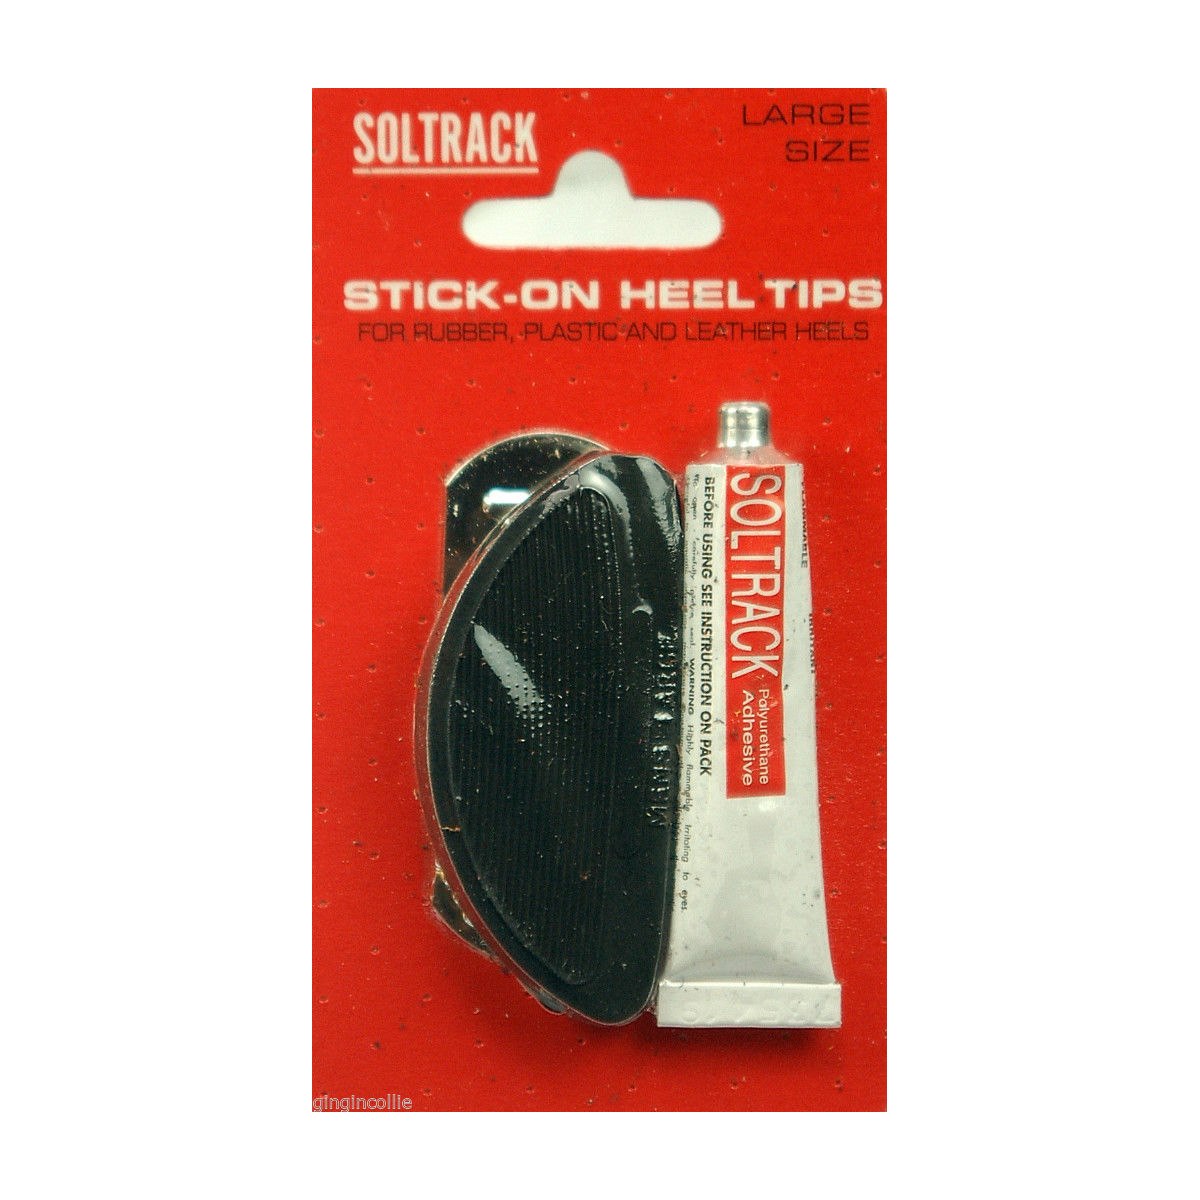 Soltrack Stick On Heel Tips Large Size